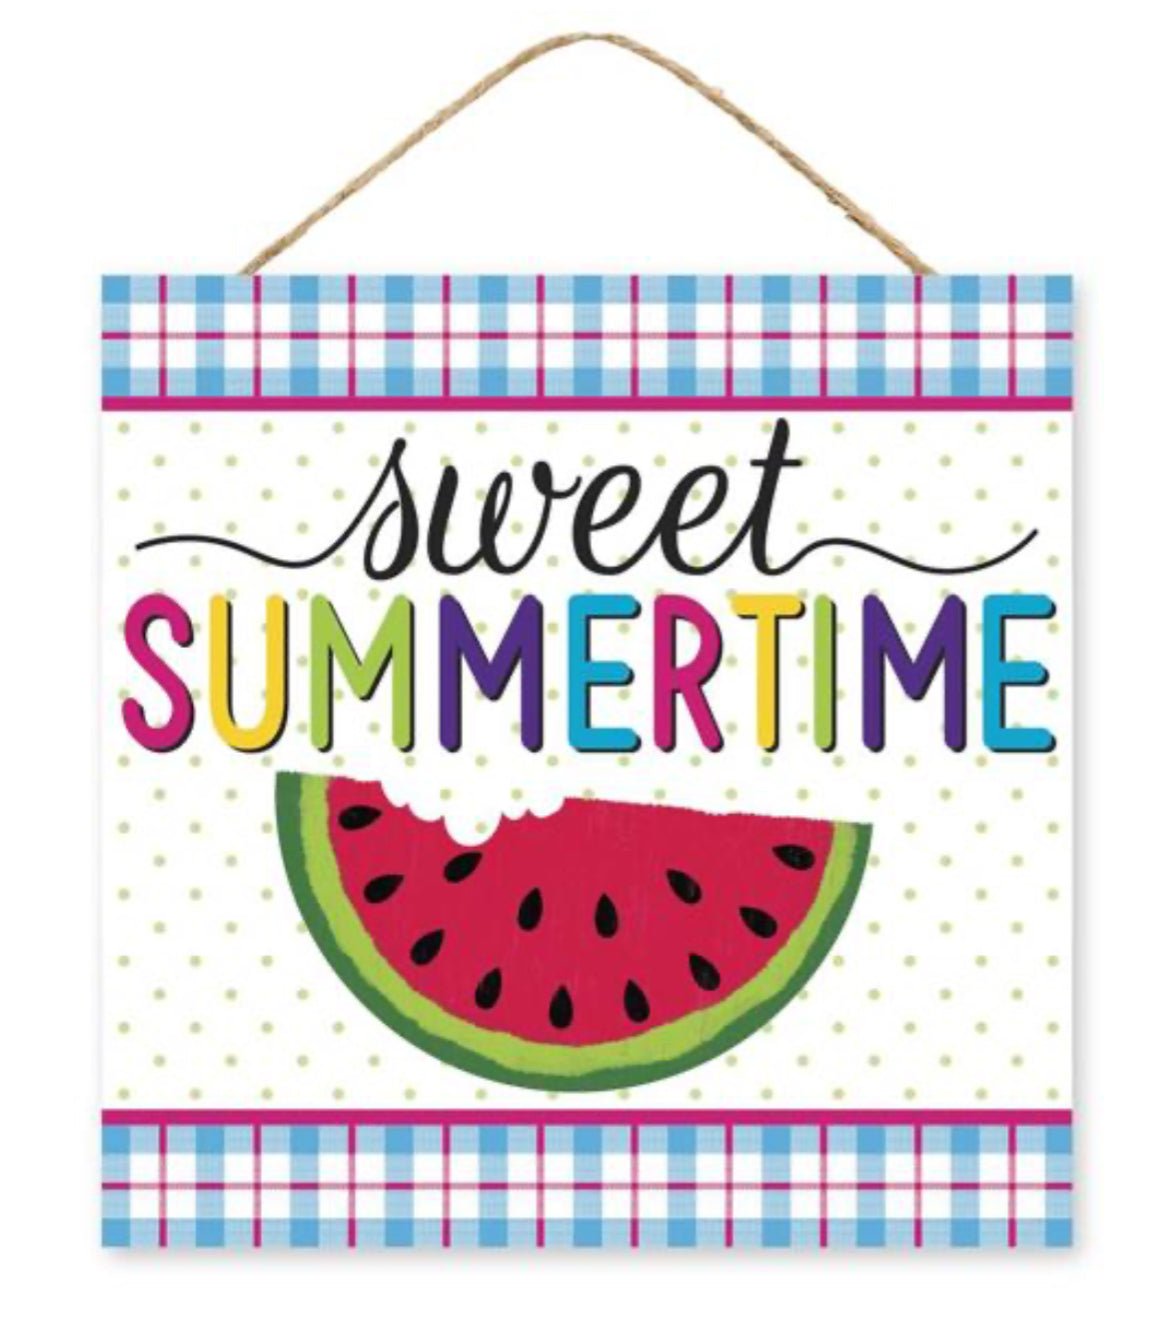 Summertime Watermelon sign - Greenery Marketsigns for wreathsAP7080